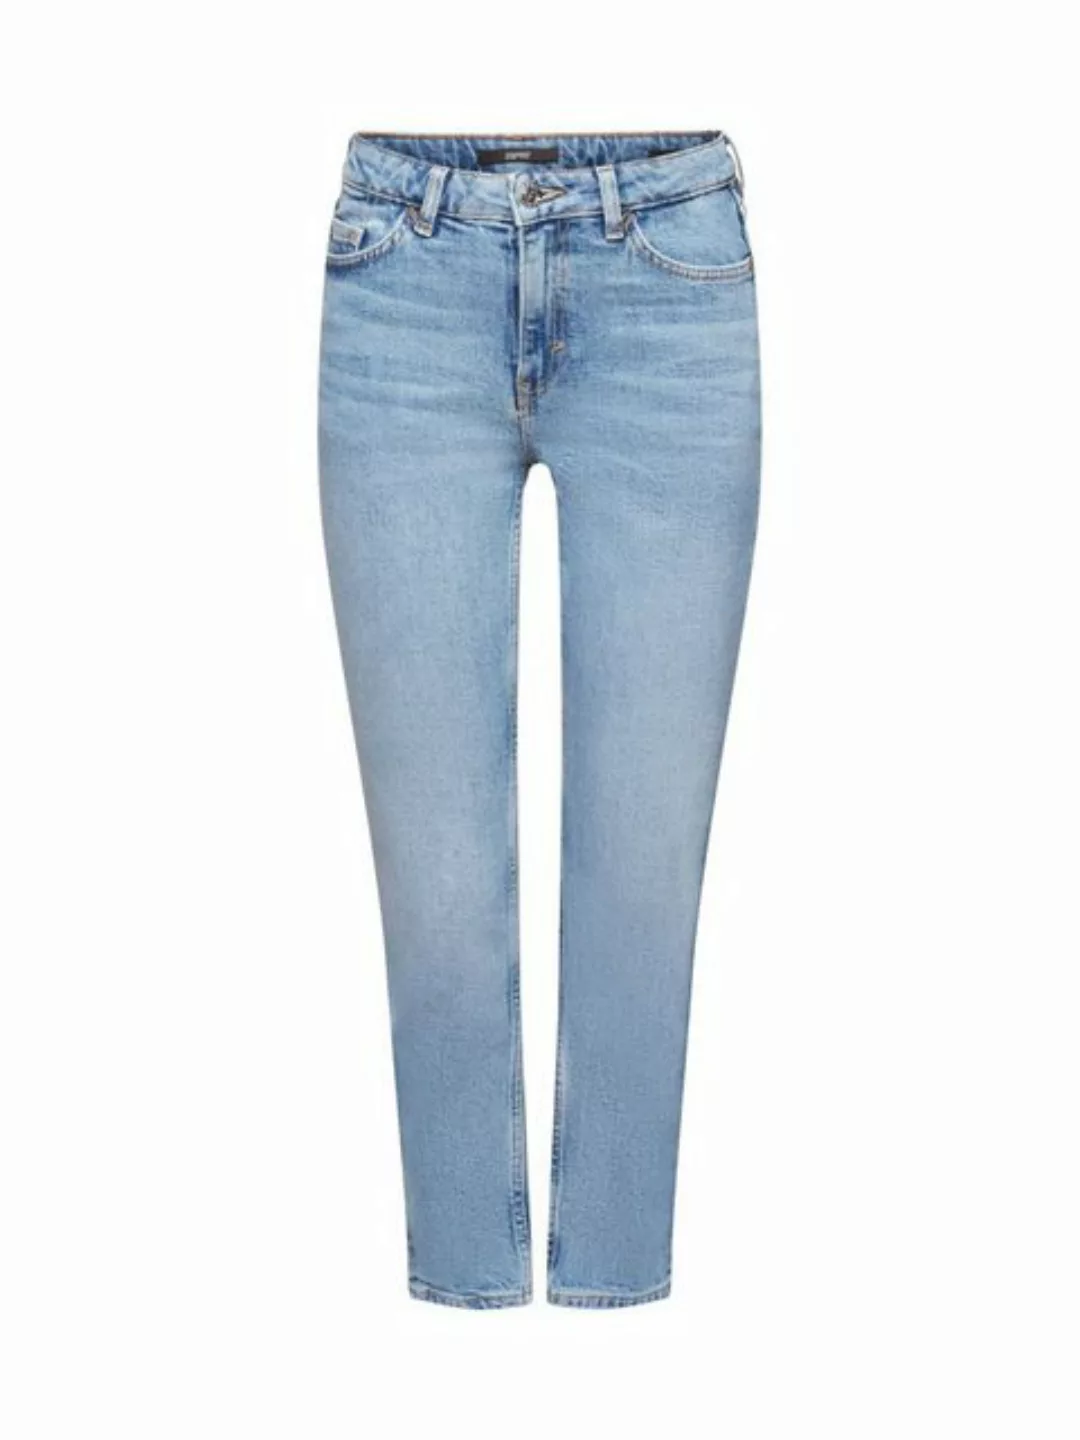 Esprit Collection 7/8-Jeans Kick Flare Jeans, High-Rise günstig online kaufen